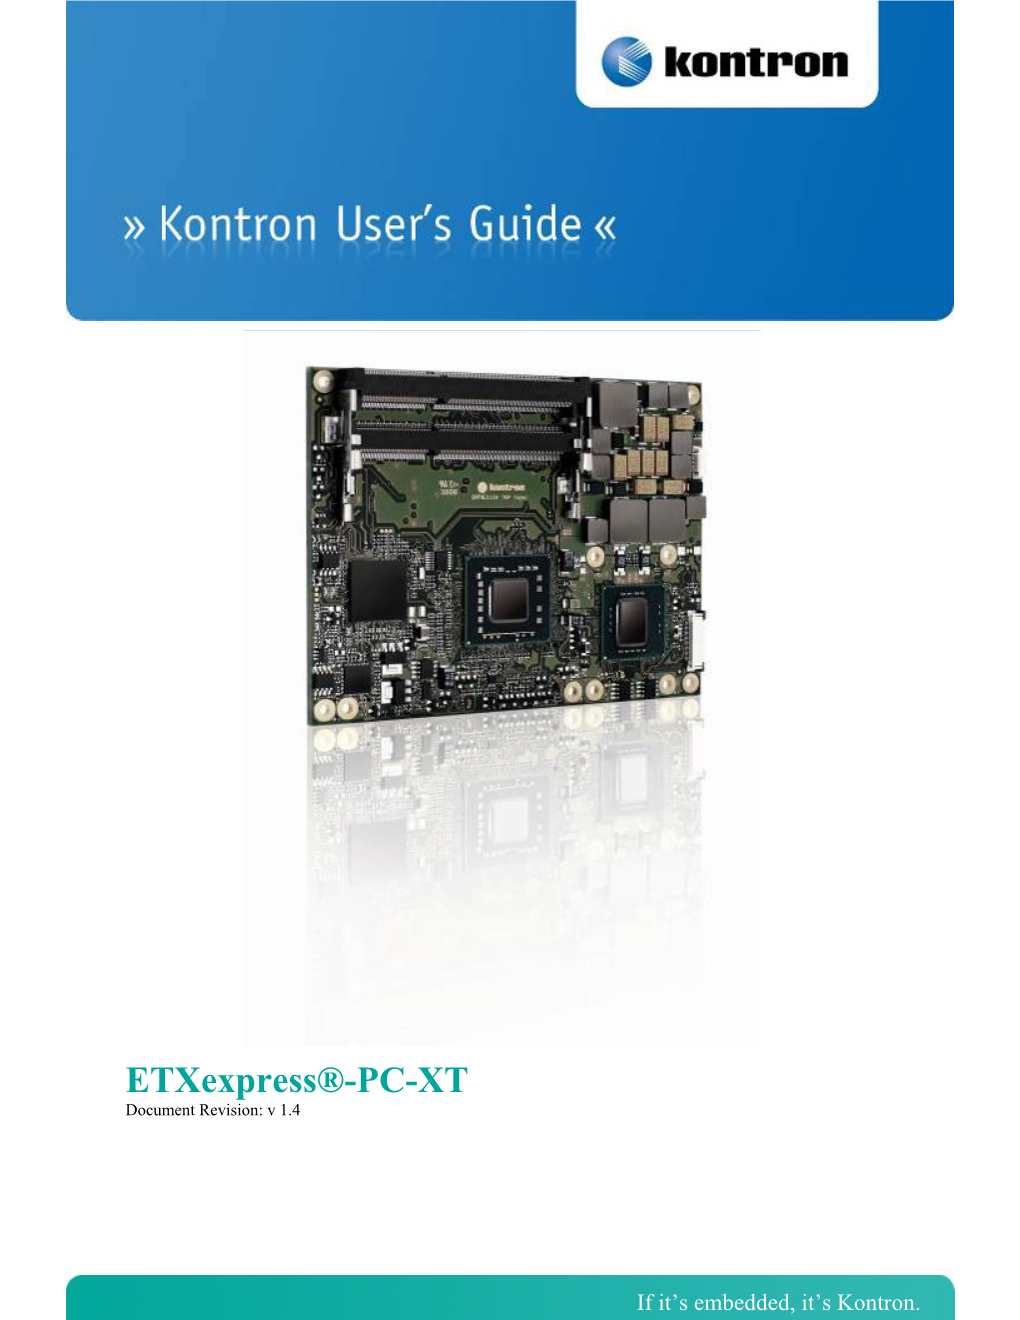 Etxexpress®-PC-XT Document Revision: V 1.4